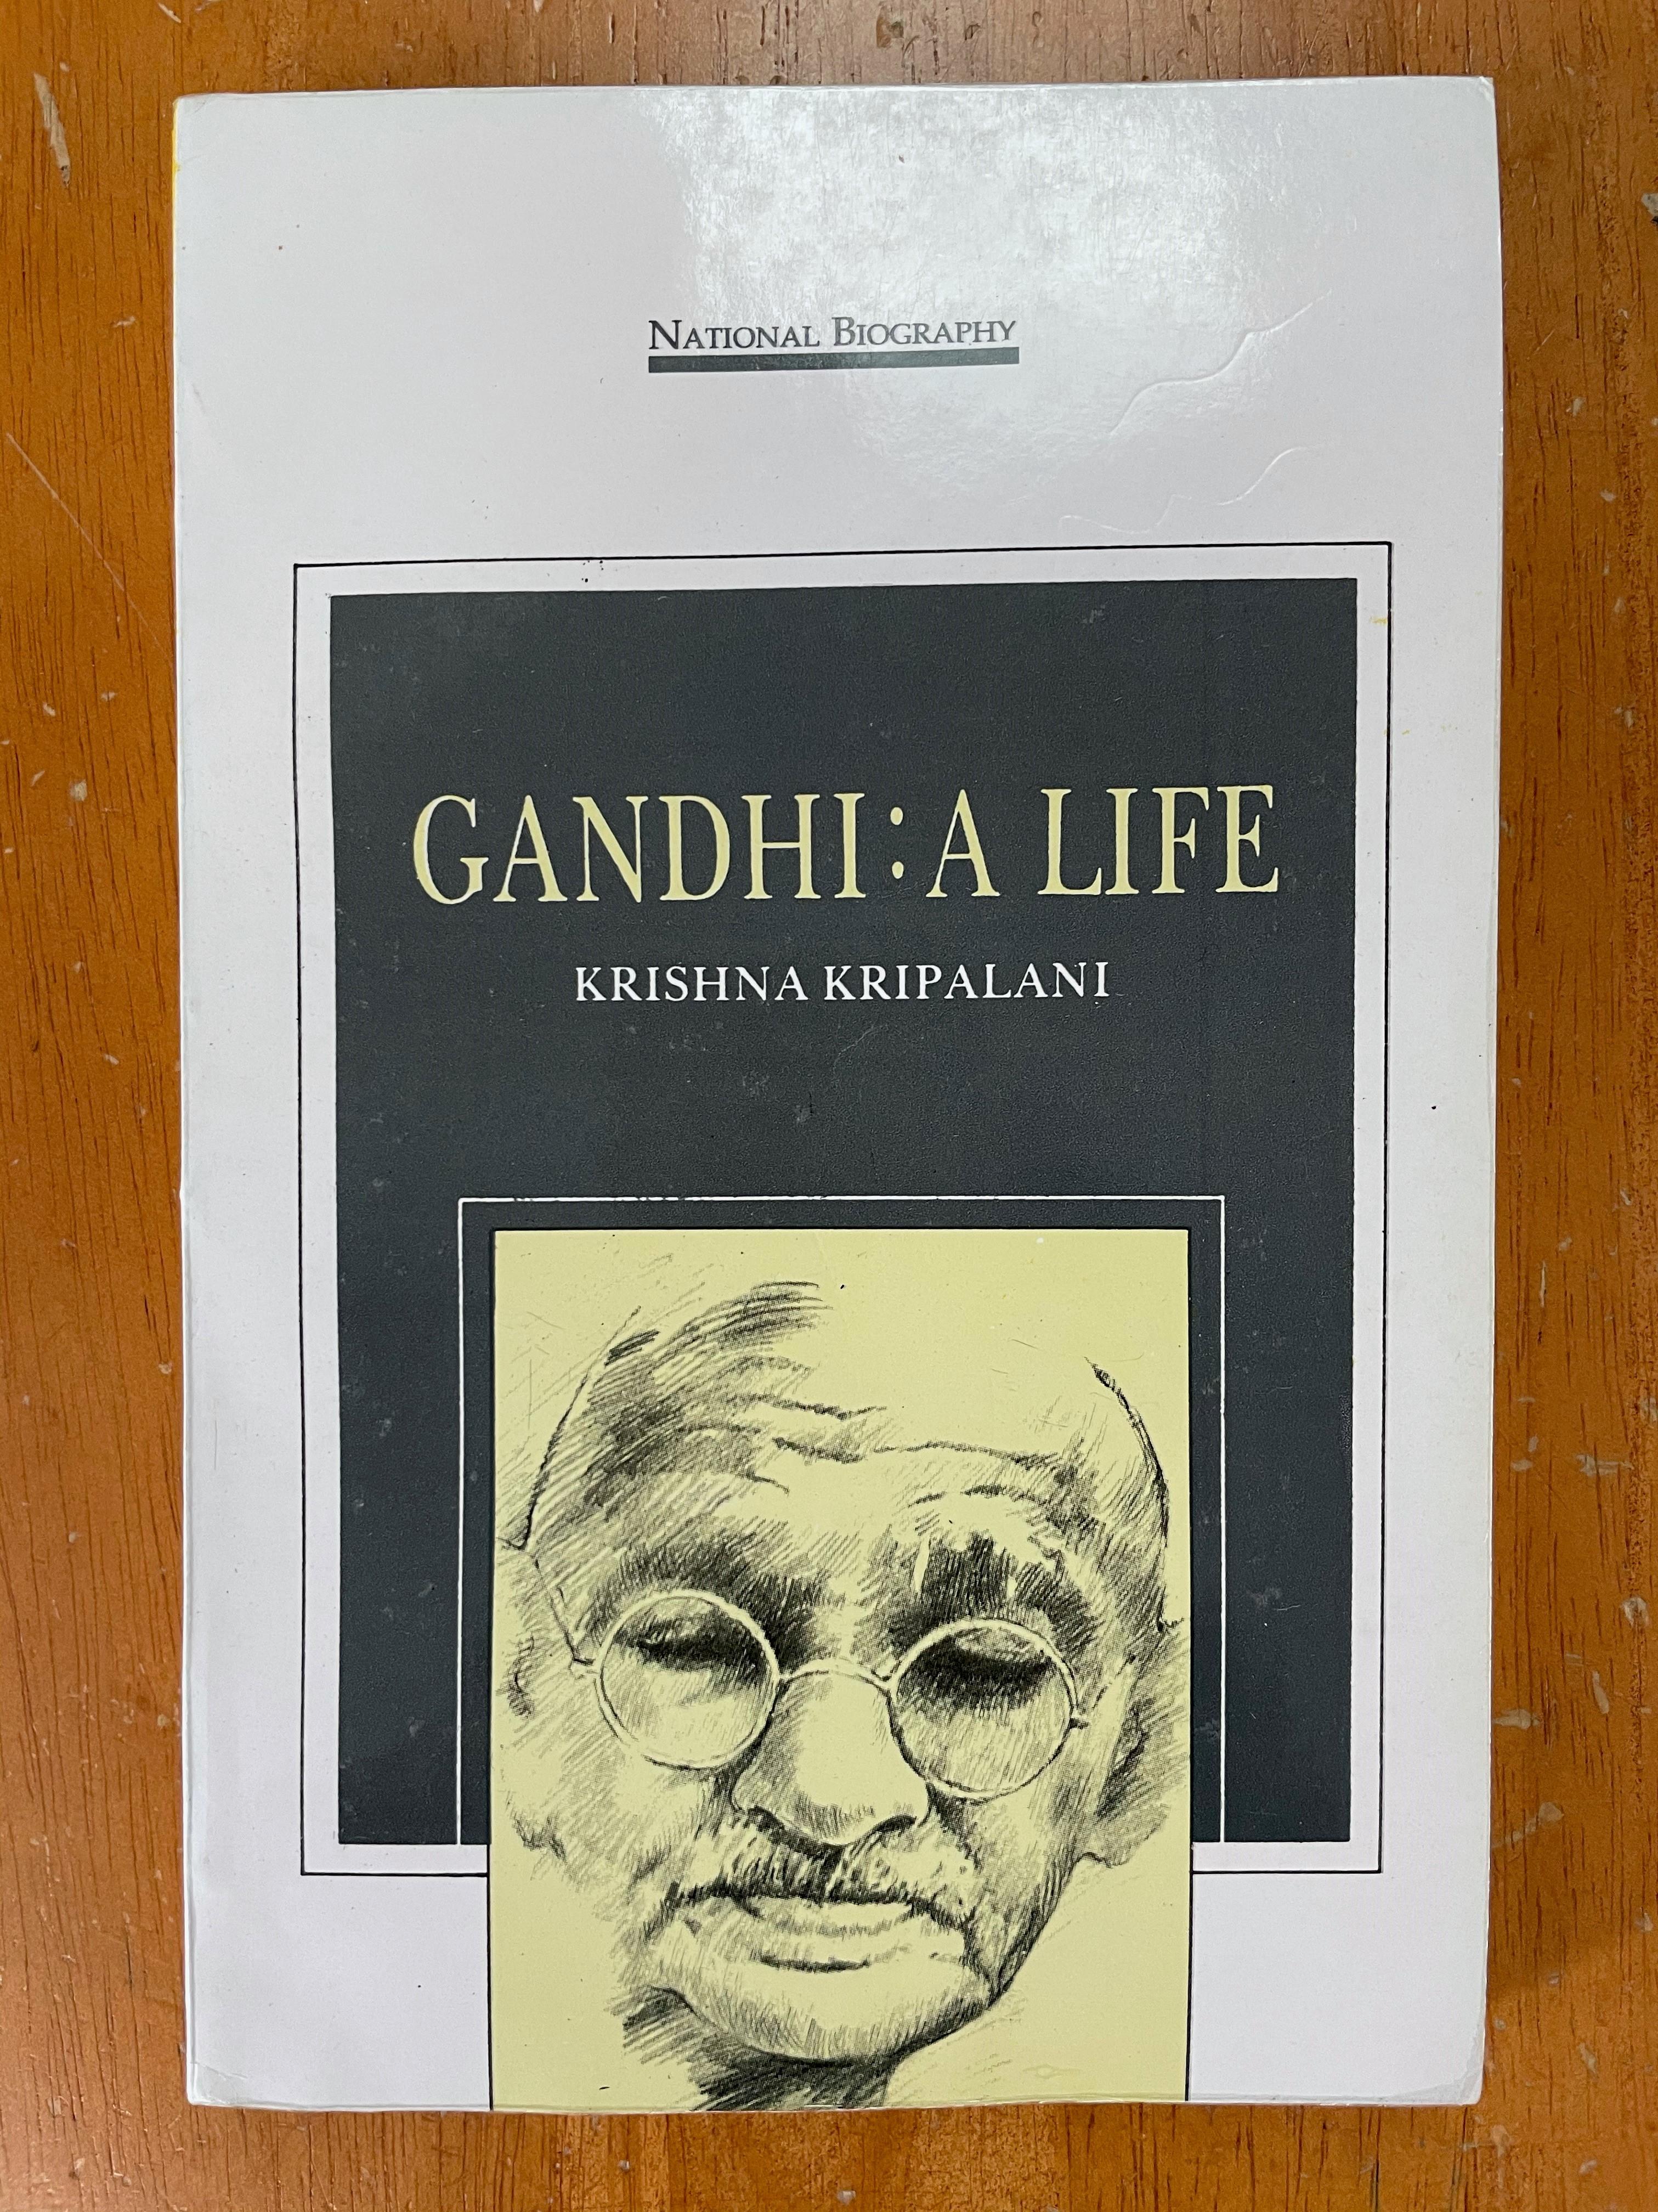 write an essay on gandhi a life by krishna kripalani